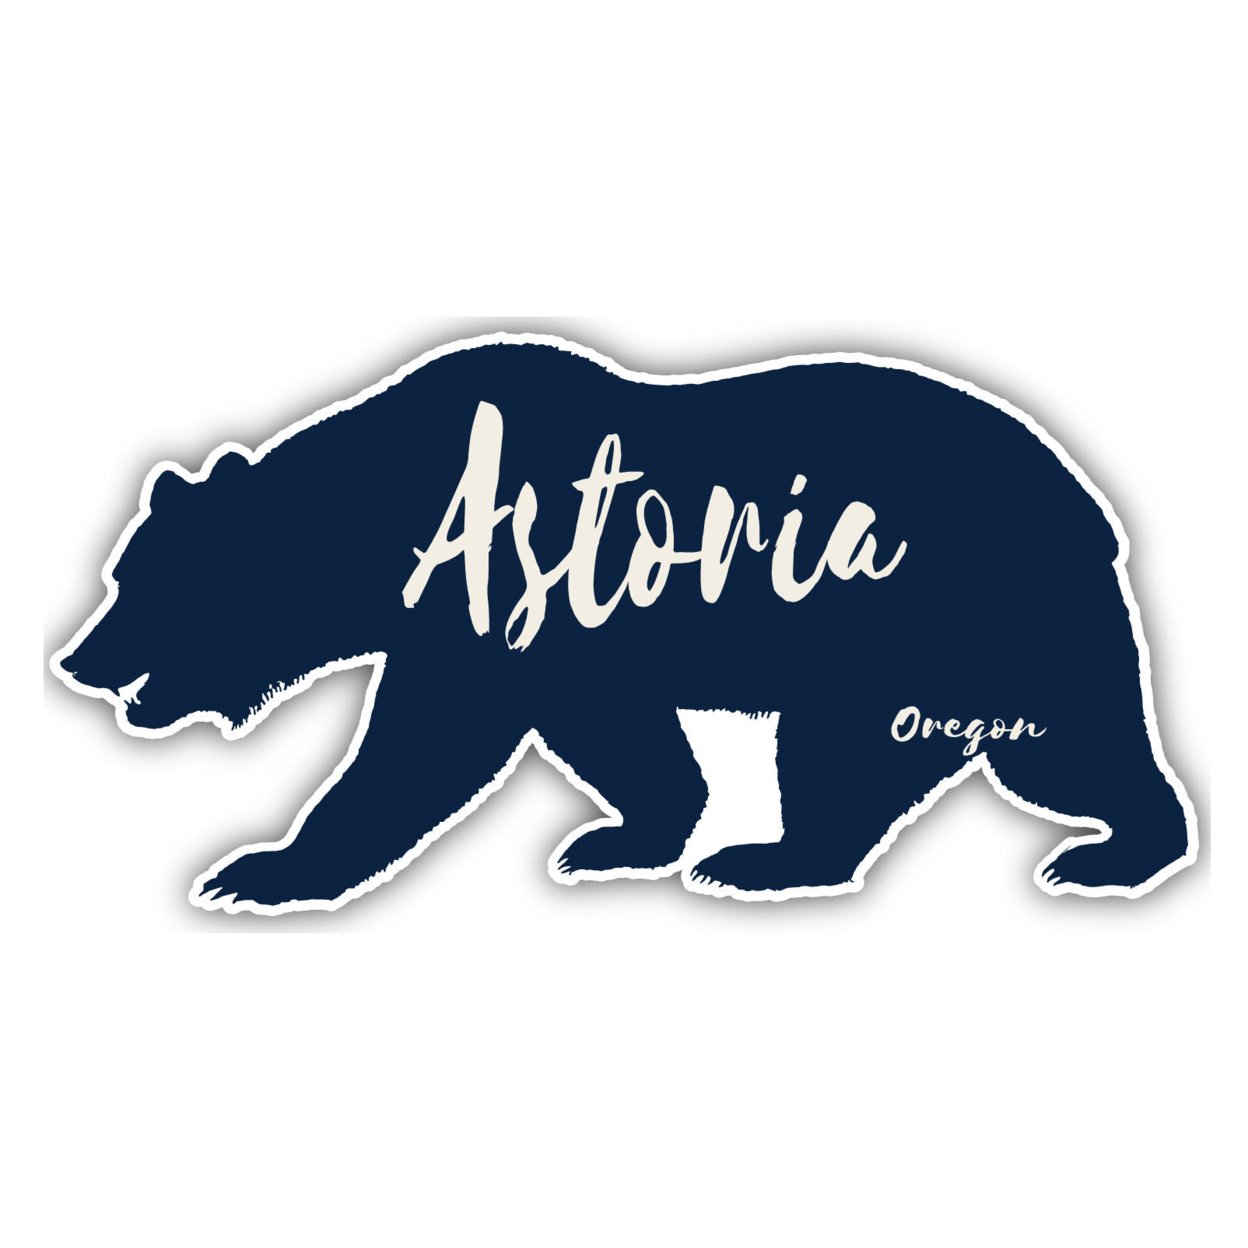 Astoria Oregon Souvenir Decorative Stickers (Choose Theme And Size) - 4-Pack, 12-Inch, Camp Life